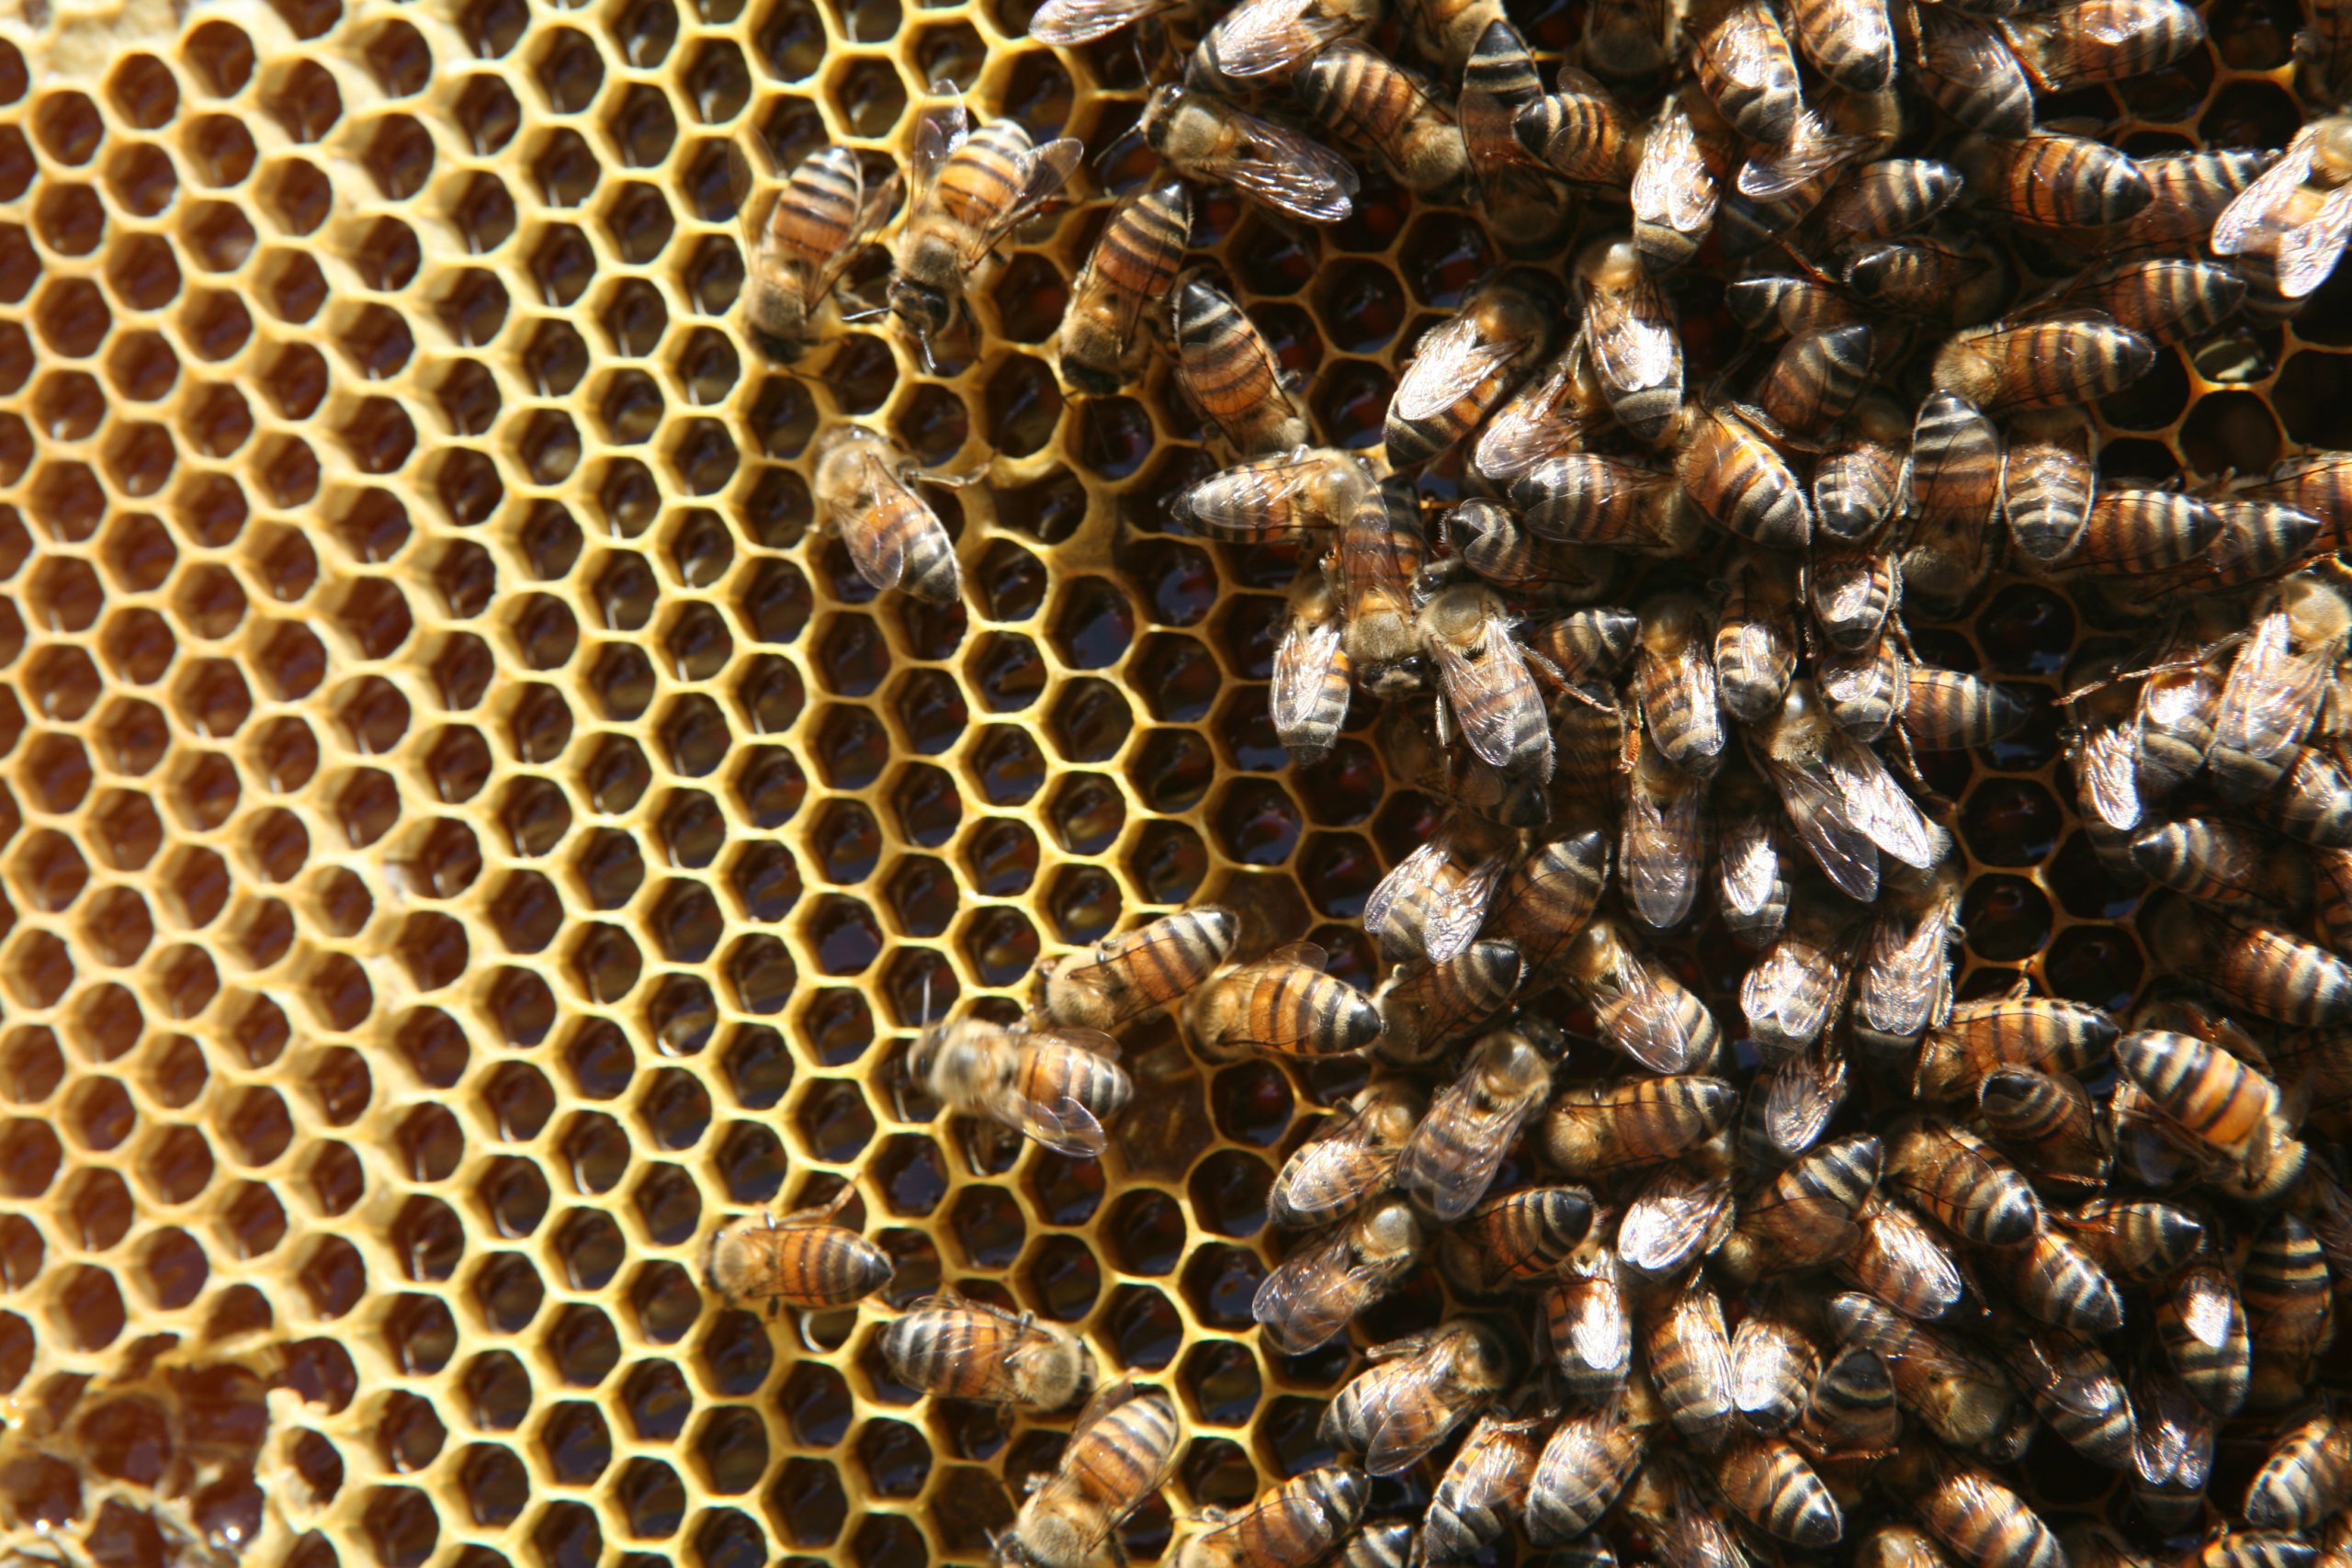 A close up bees on of a frame of honeycomb in a beehive. 

CIPAC, Cooperativa Integral de Producción Apicultores de Cuilco, is a Fairtrade-certified honey-producing organisation in Cuilco, Huehuetenango, Guatemala.